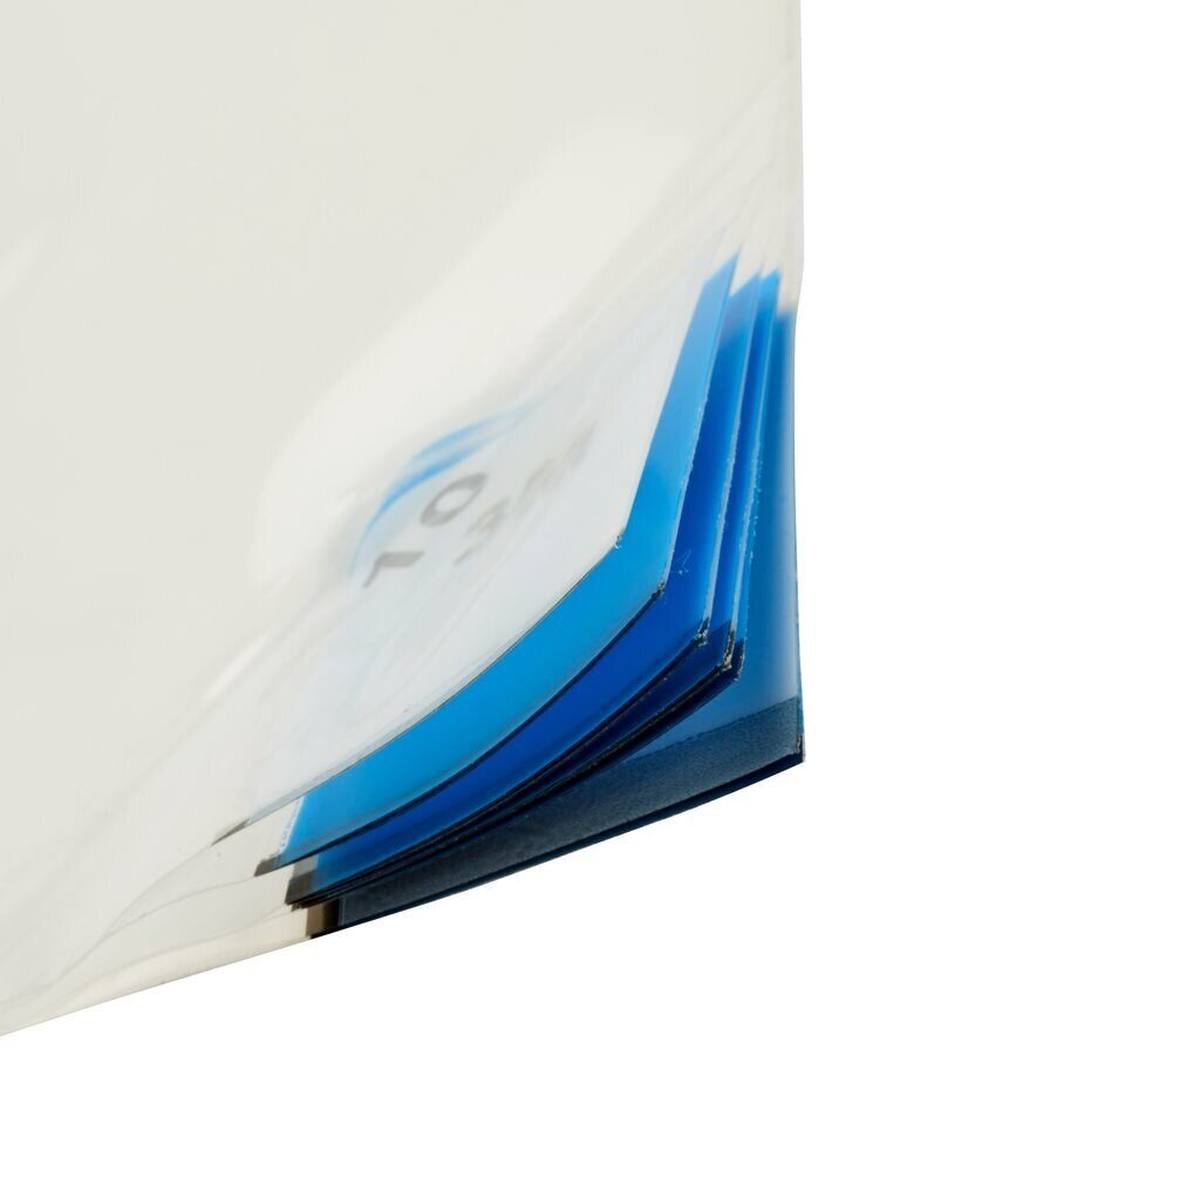 3M 4300 Nomad fijnstof kleefmat, blauw, 1,15m x 0,6m, 40 stuks transparante polyethyleenlaag